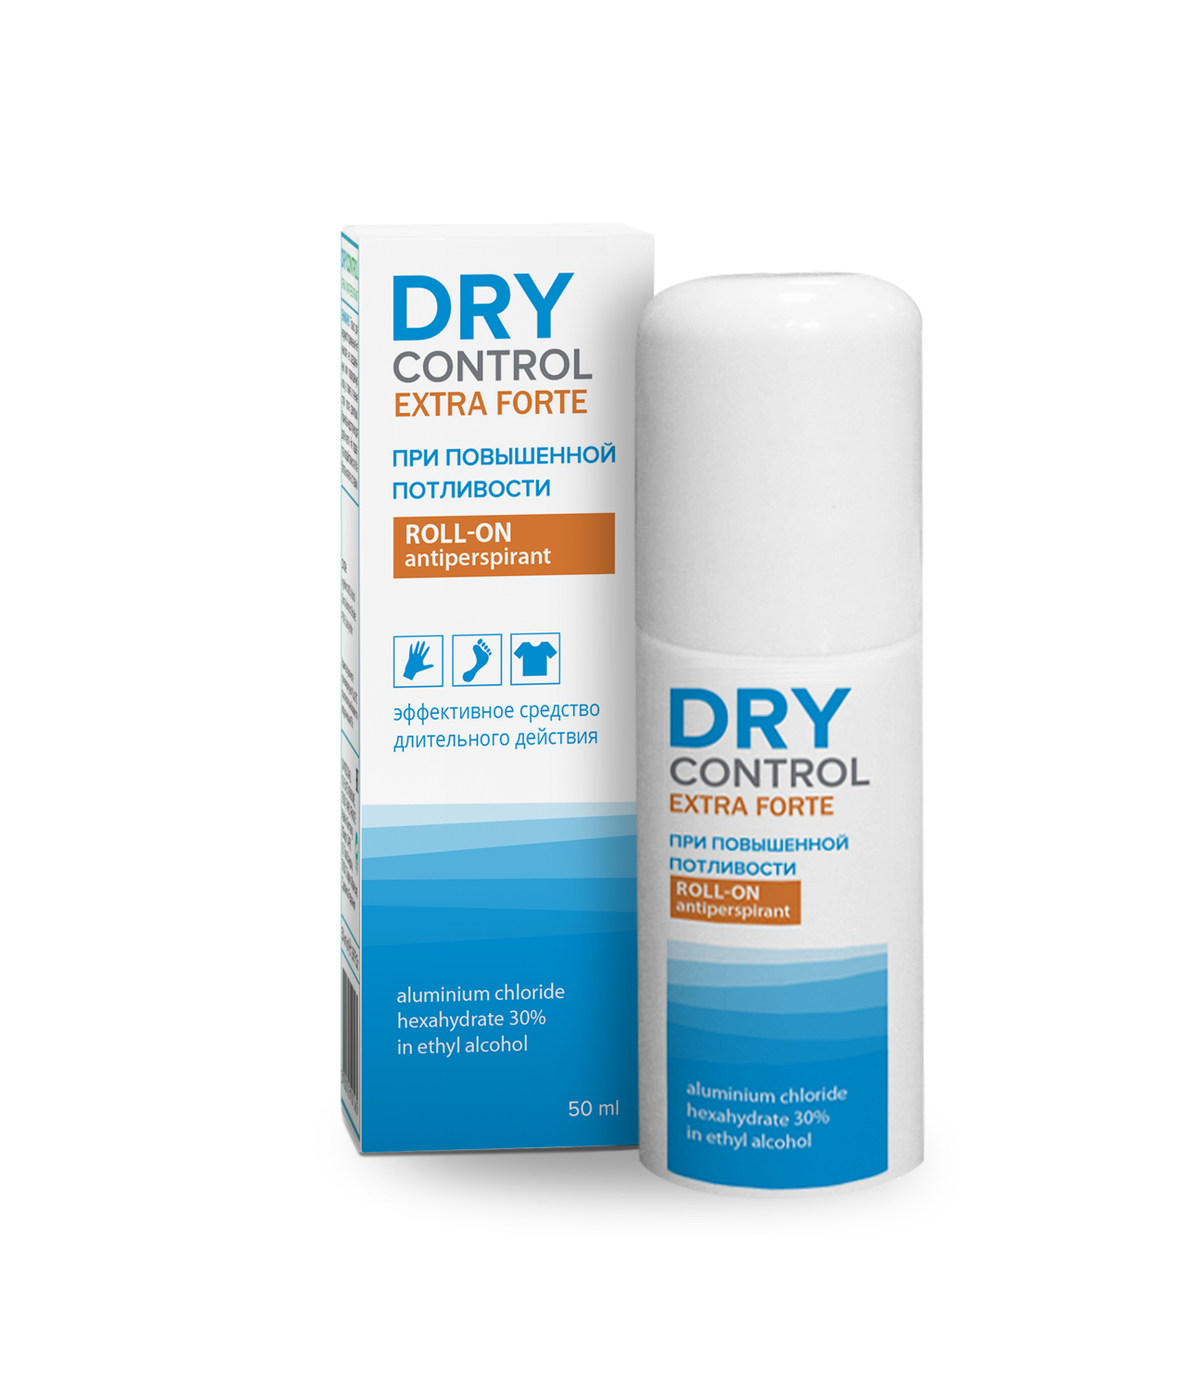 Dry dry дезодорант отзывы